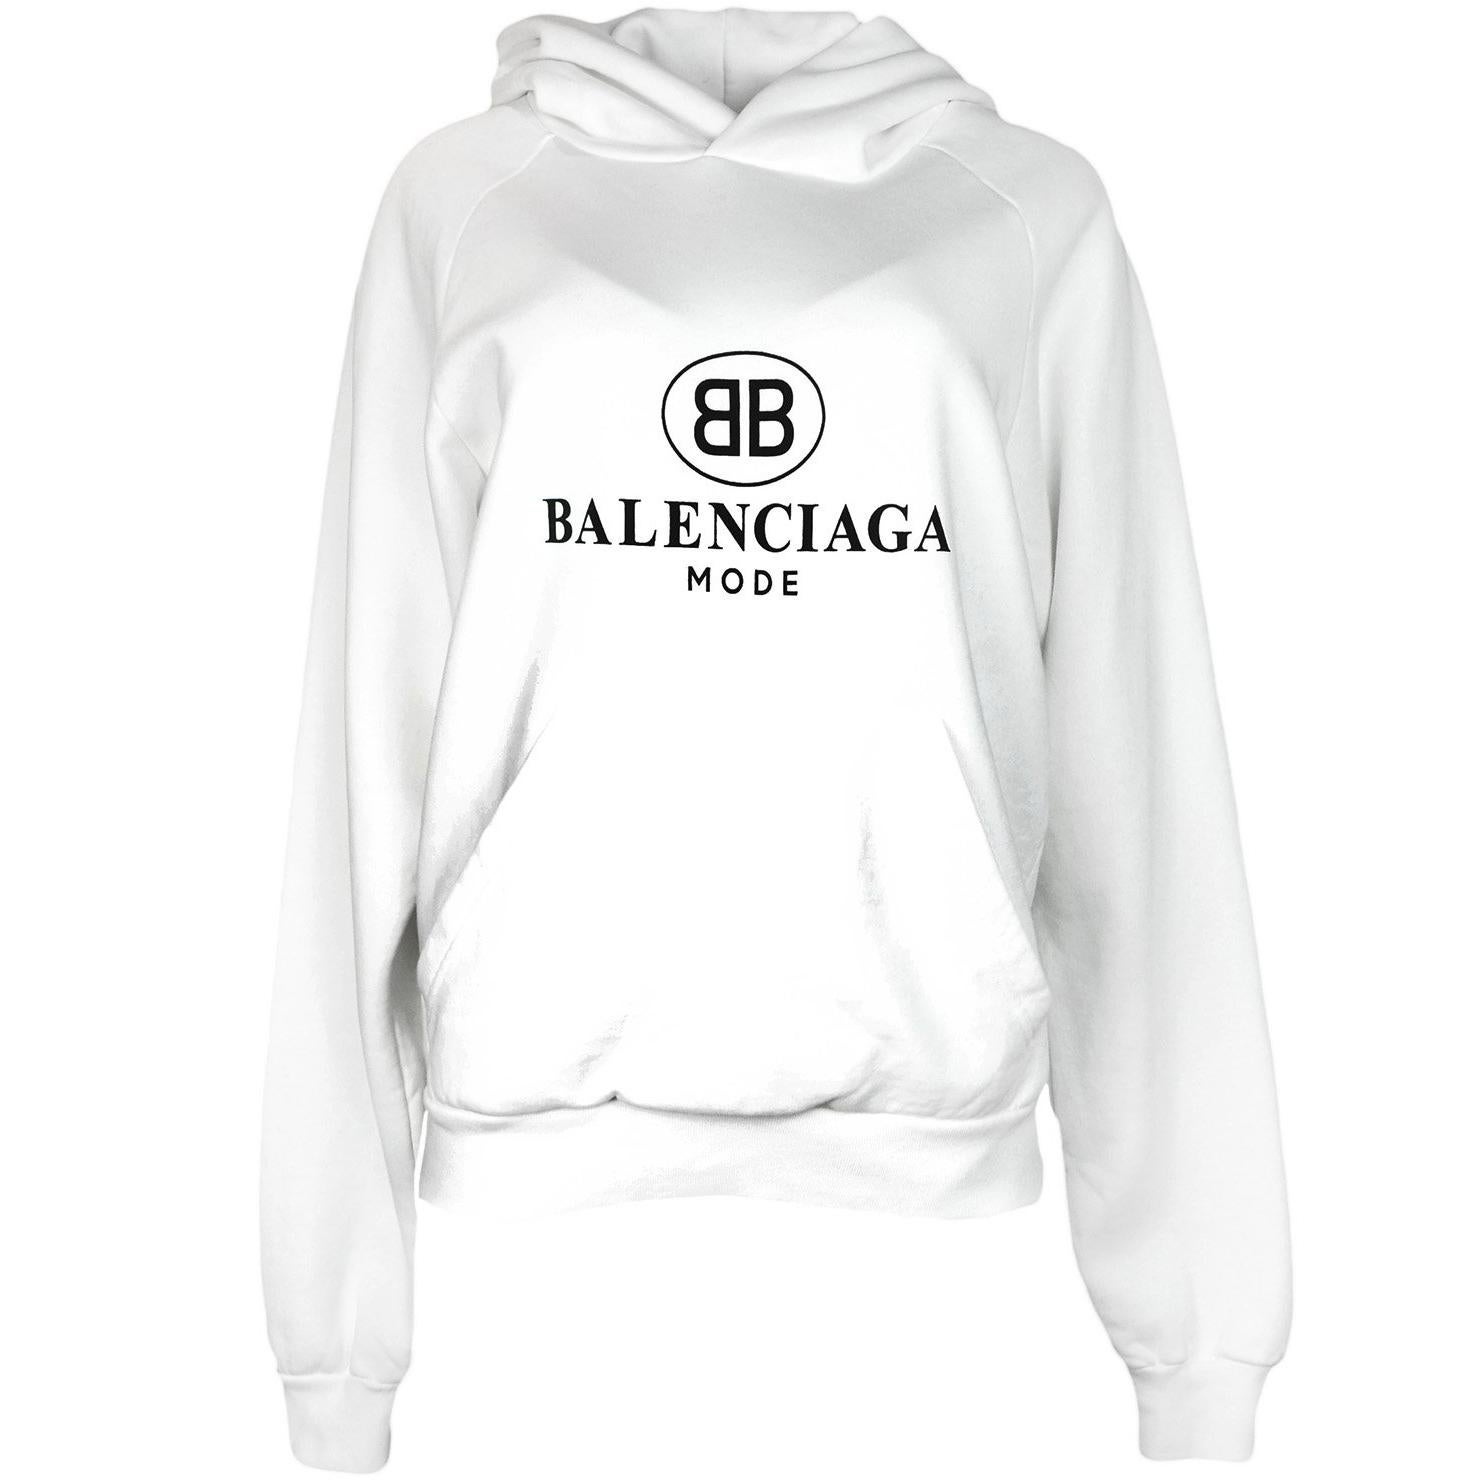 Balenciaga Unisex White BB Mode Hooded Sweatshirt